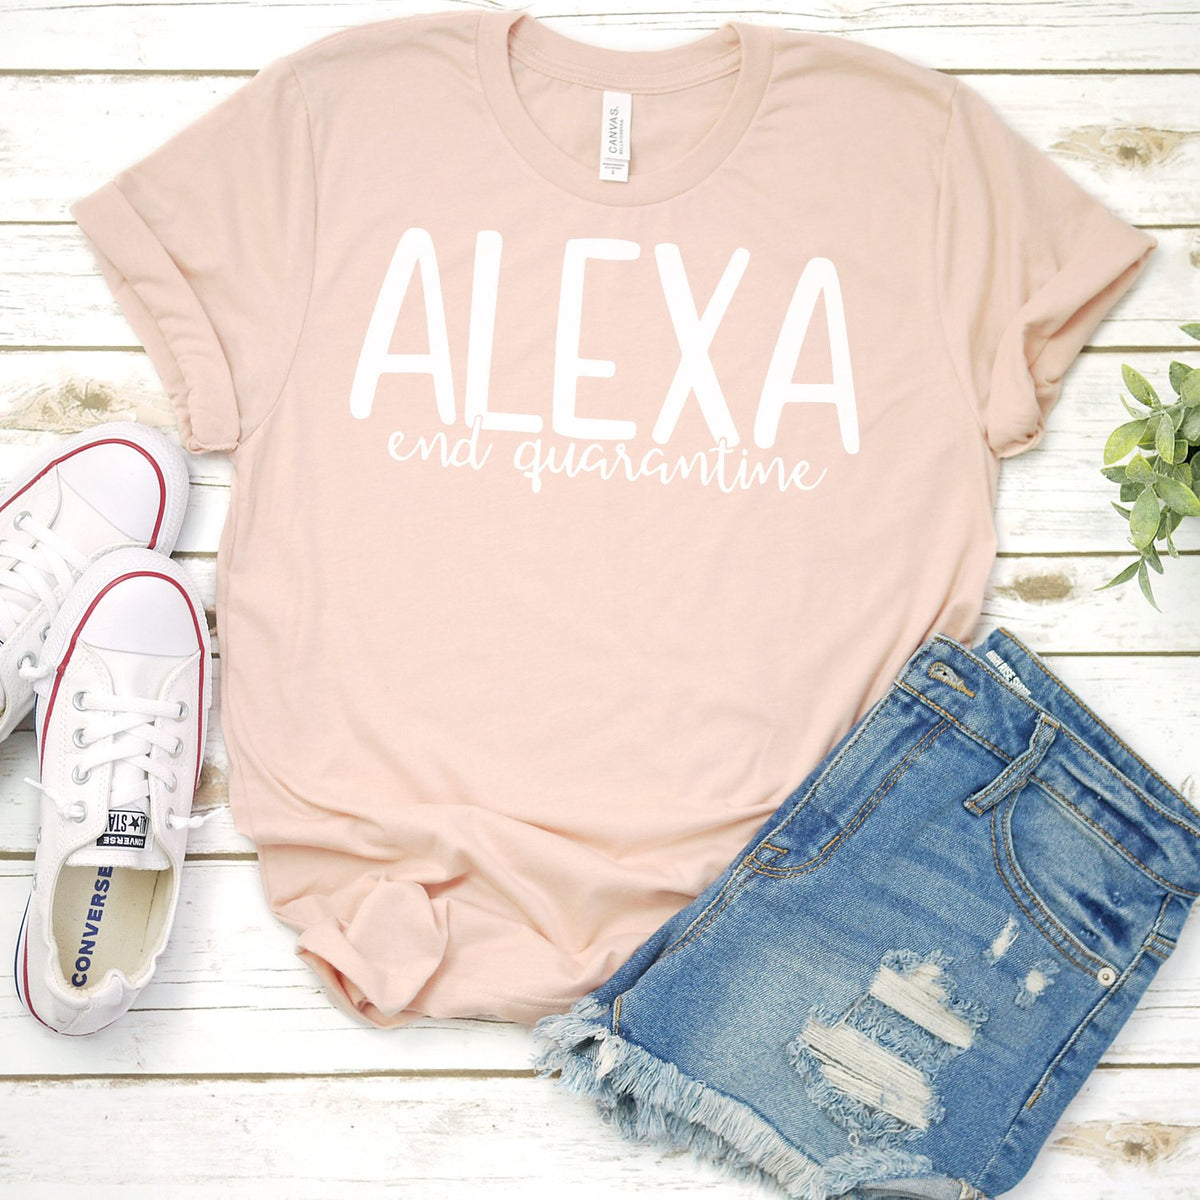 Alexa End Quarantine - Short Sleeve Tee Shirt